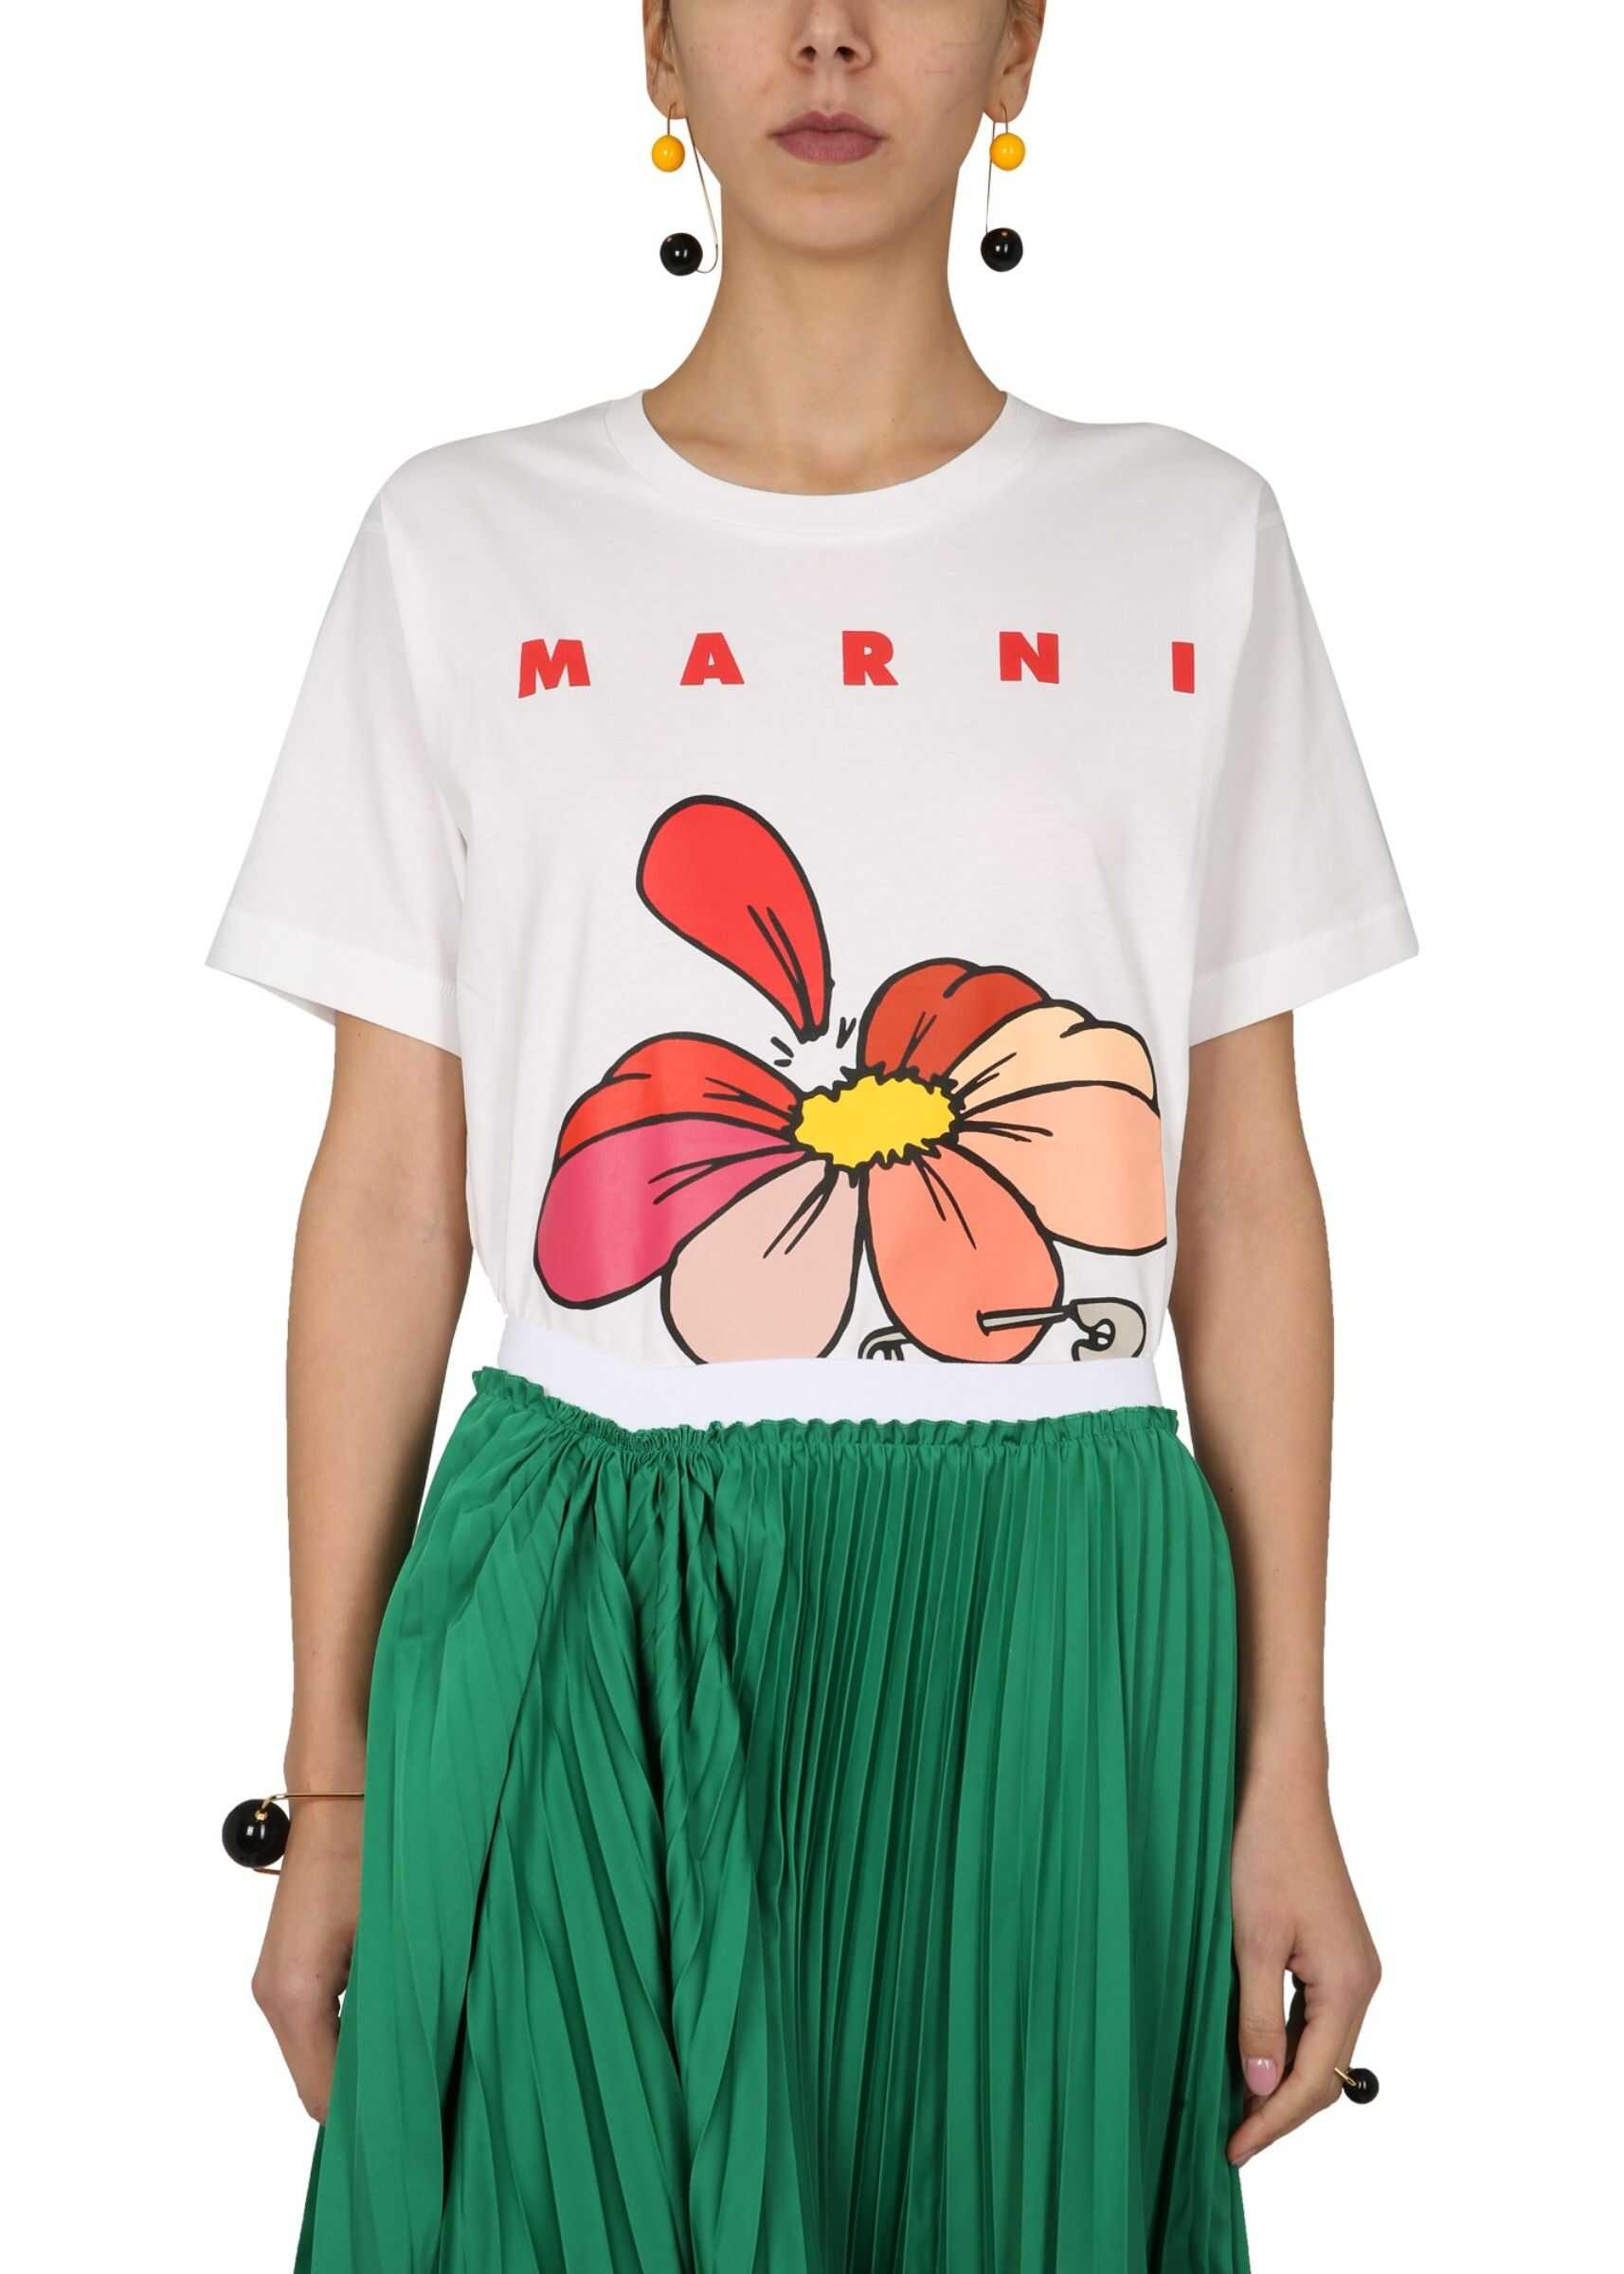 Marni T-Shirt With Flower Print THJEL32EPT_USCR1400W01 WHITE b-mall.ro imagine 2022